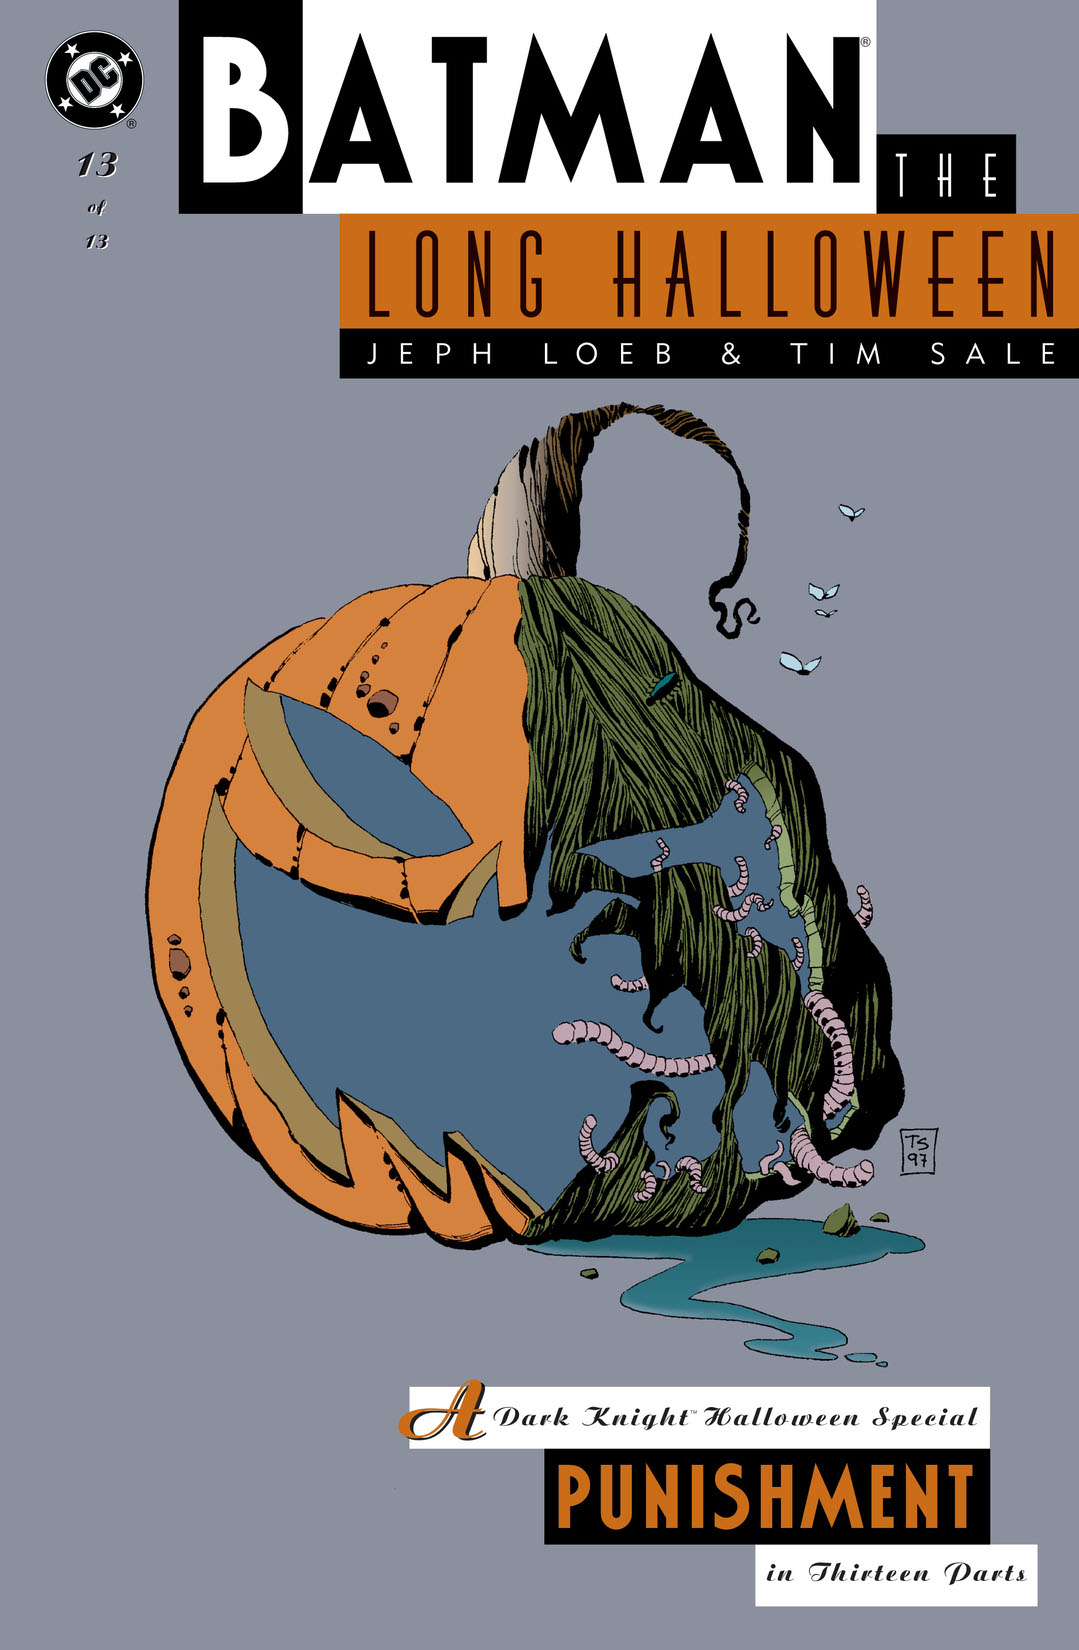 Batman: The Long Halloween #13 preview images